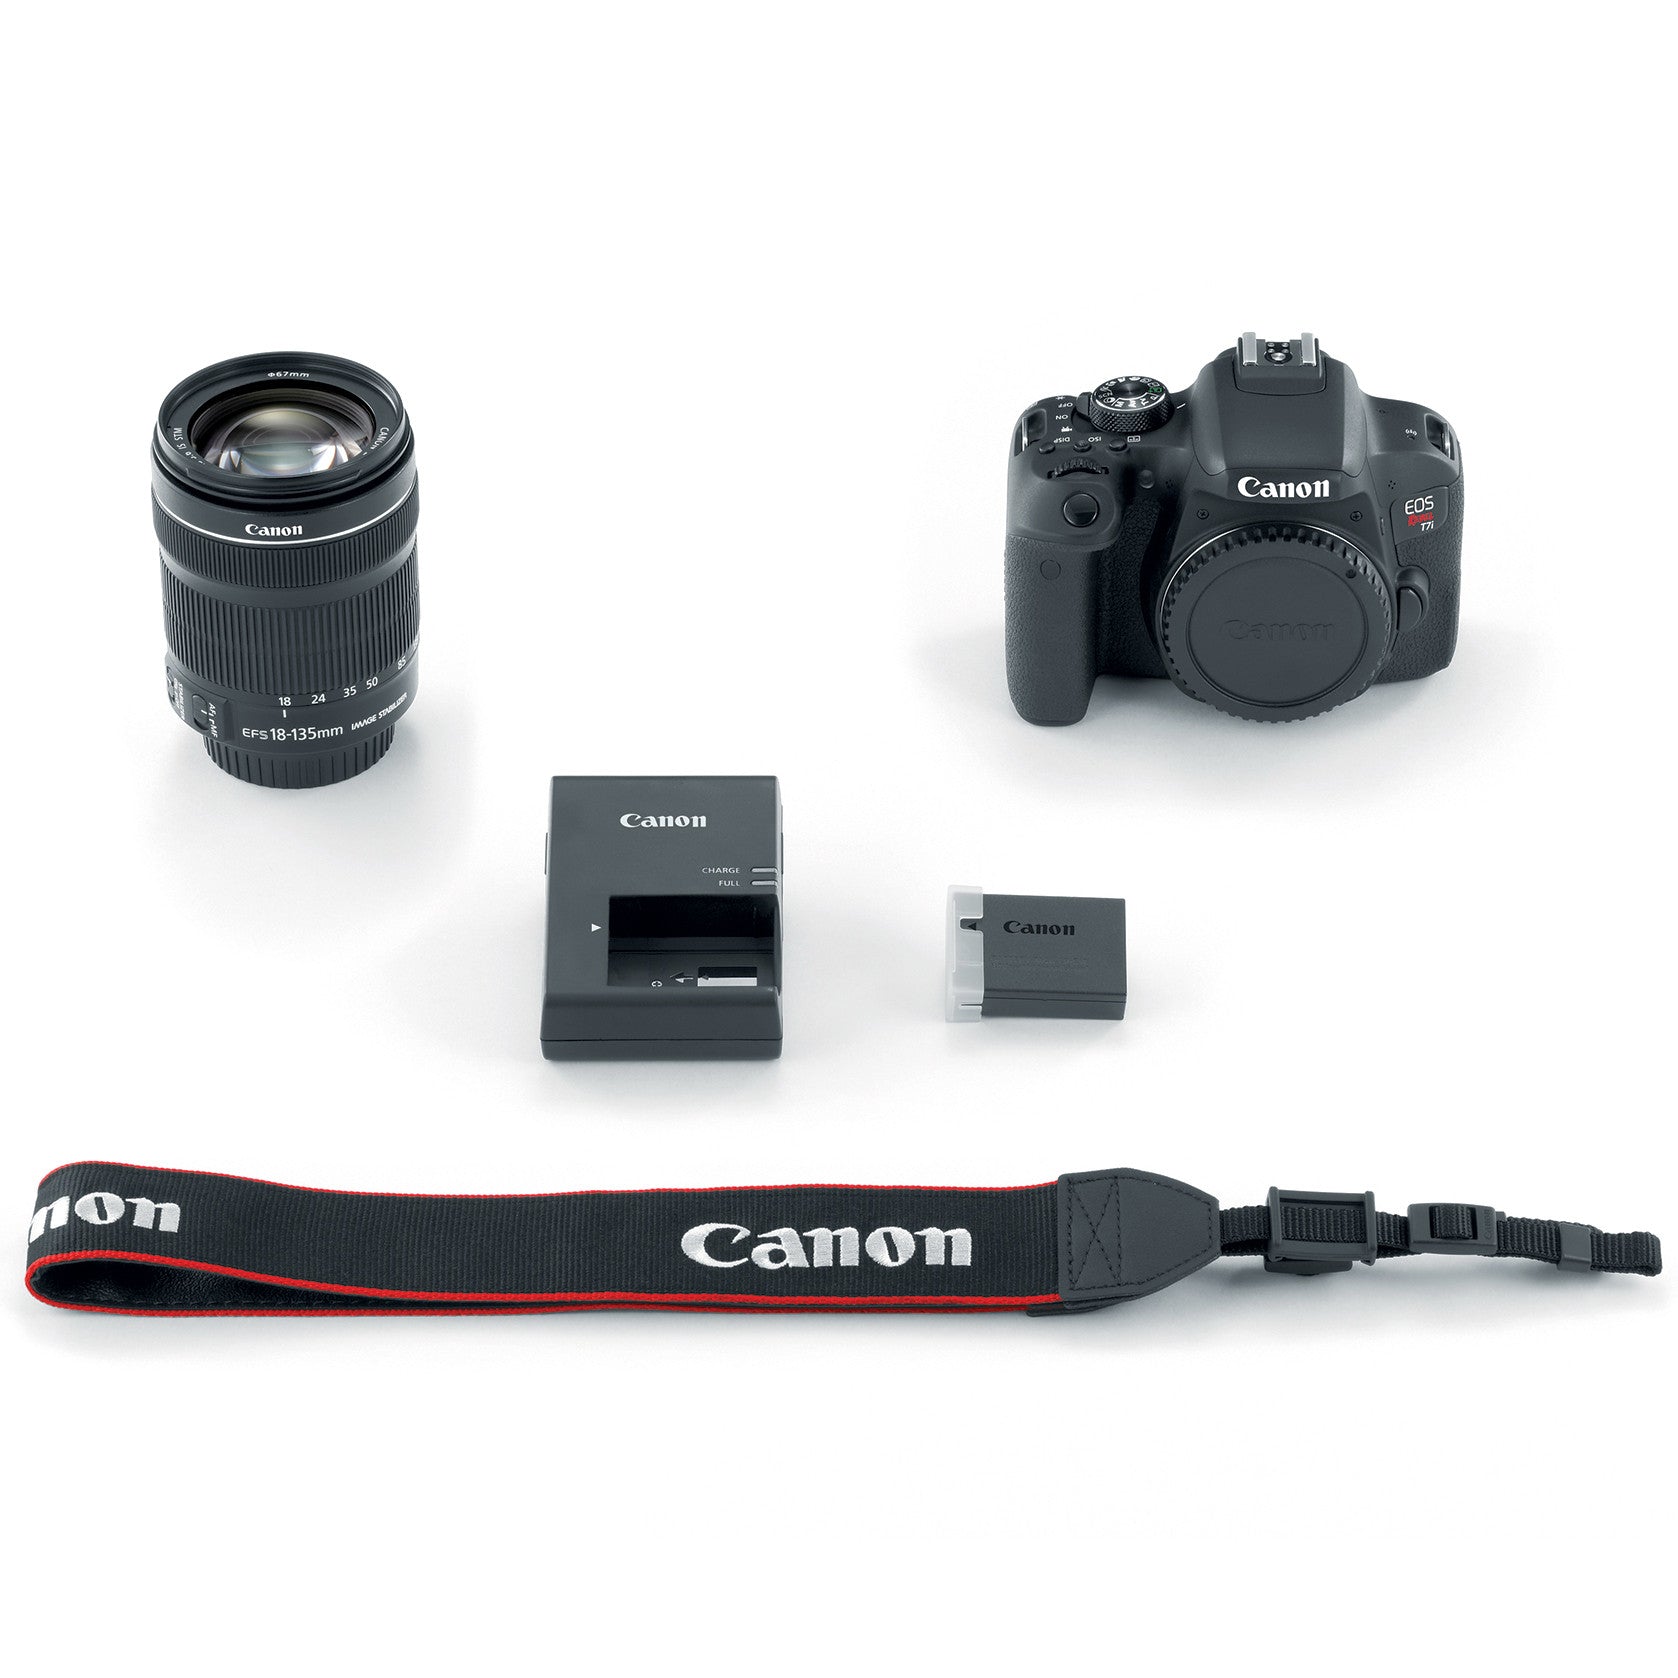 Canon EOS Rebel T7i DSLR 18-135mm STM Camera Kit